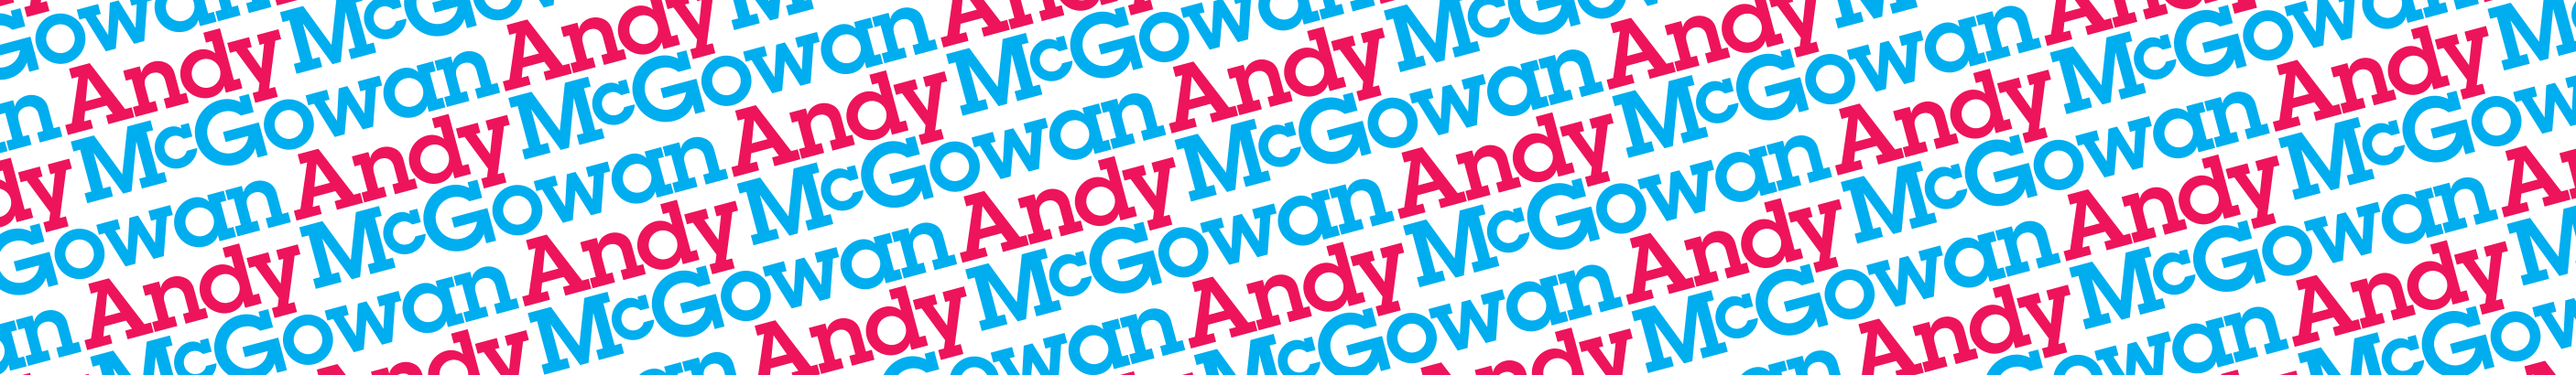 Banner de perfil de Andy McGowan